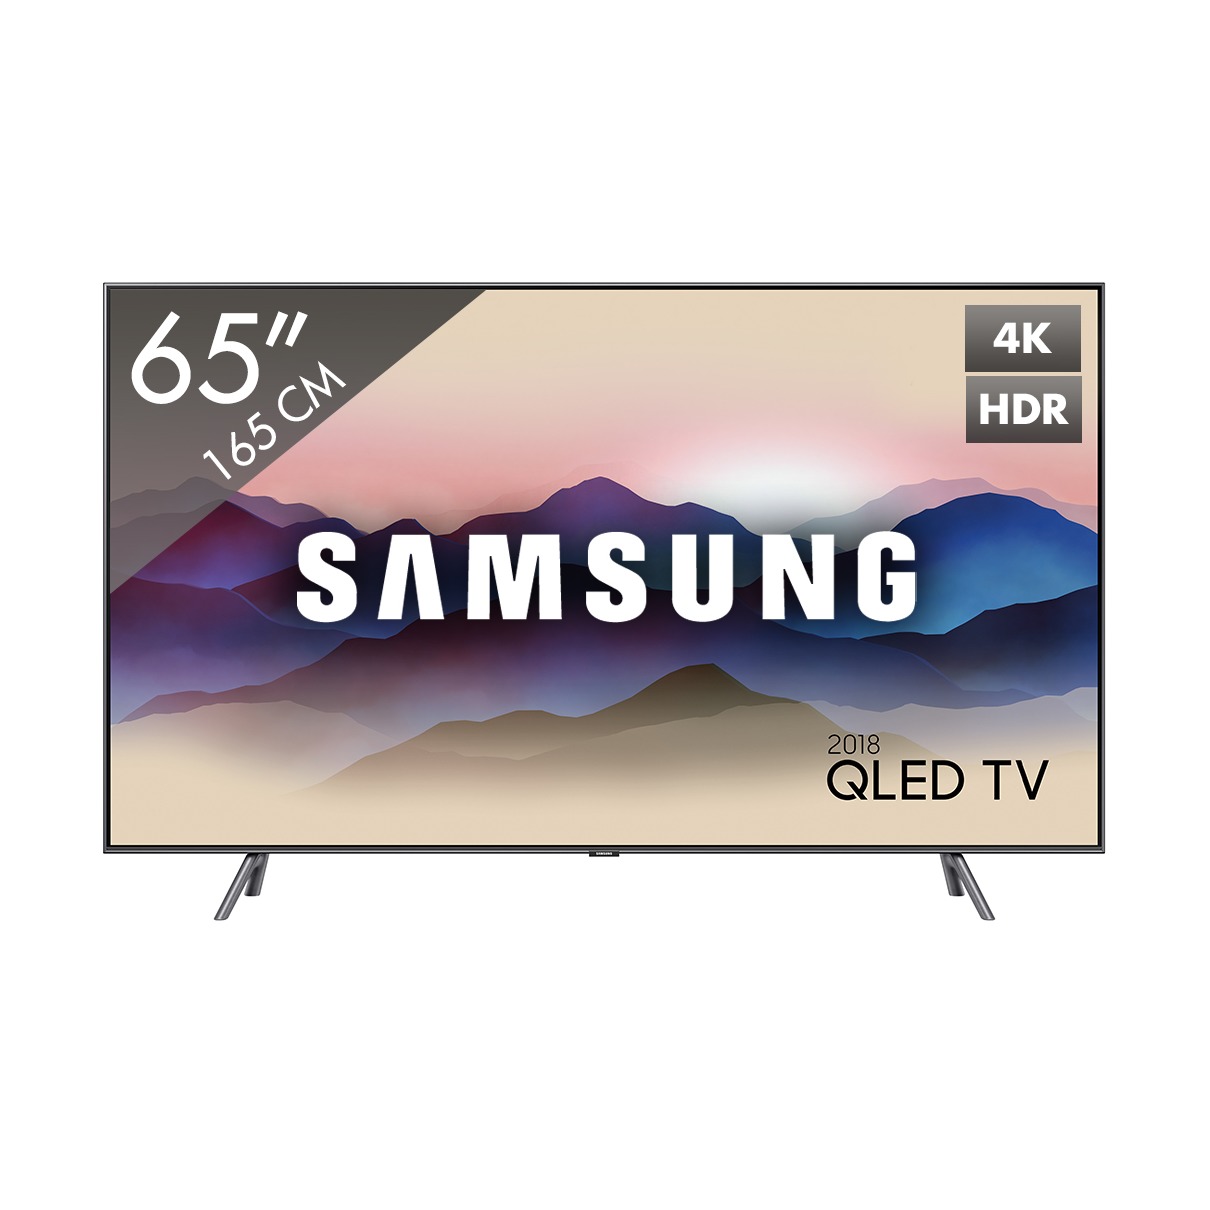 Samsung QE65Q8D QLED TV 2018